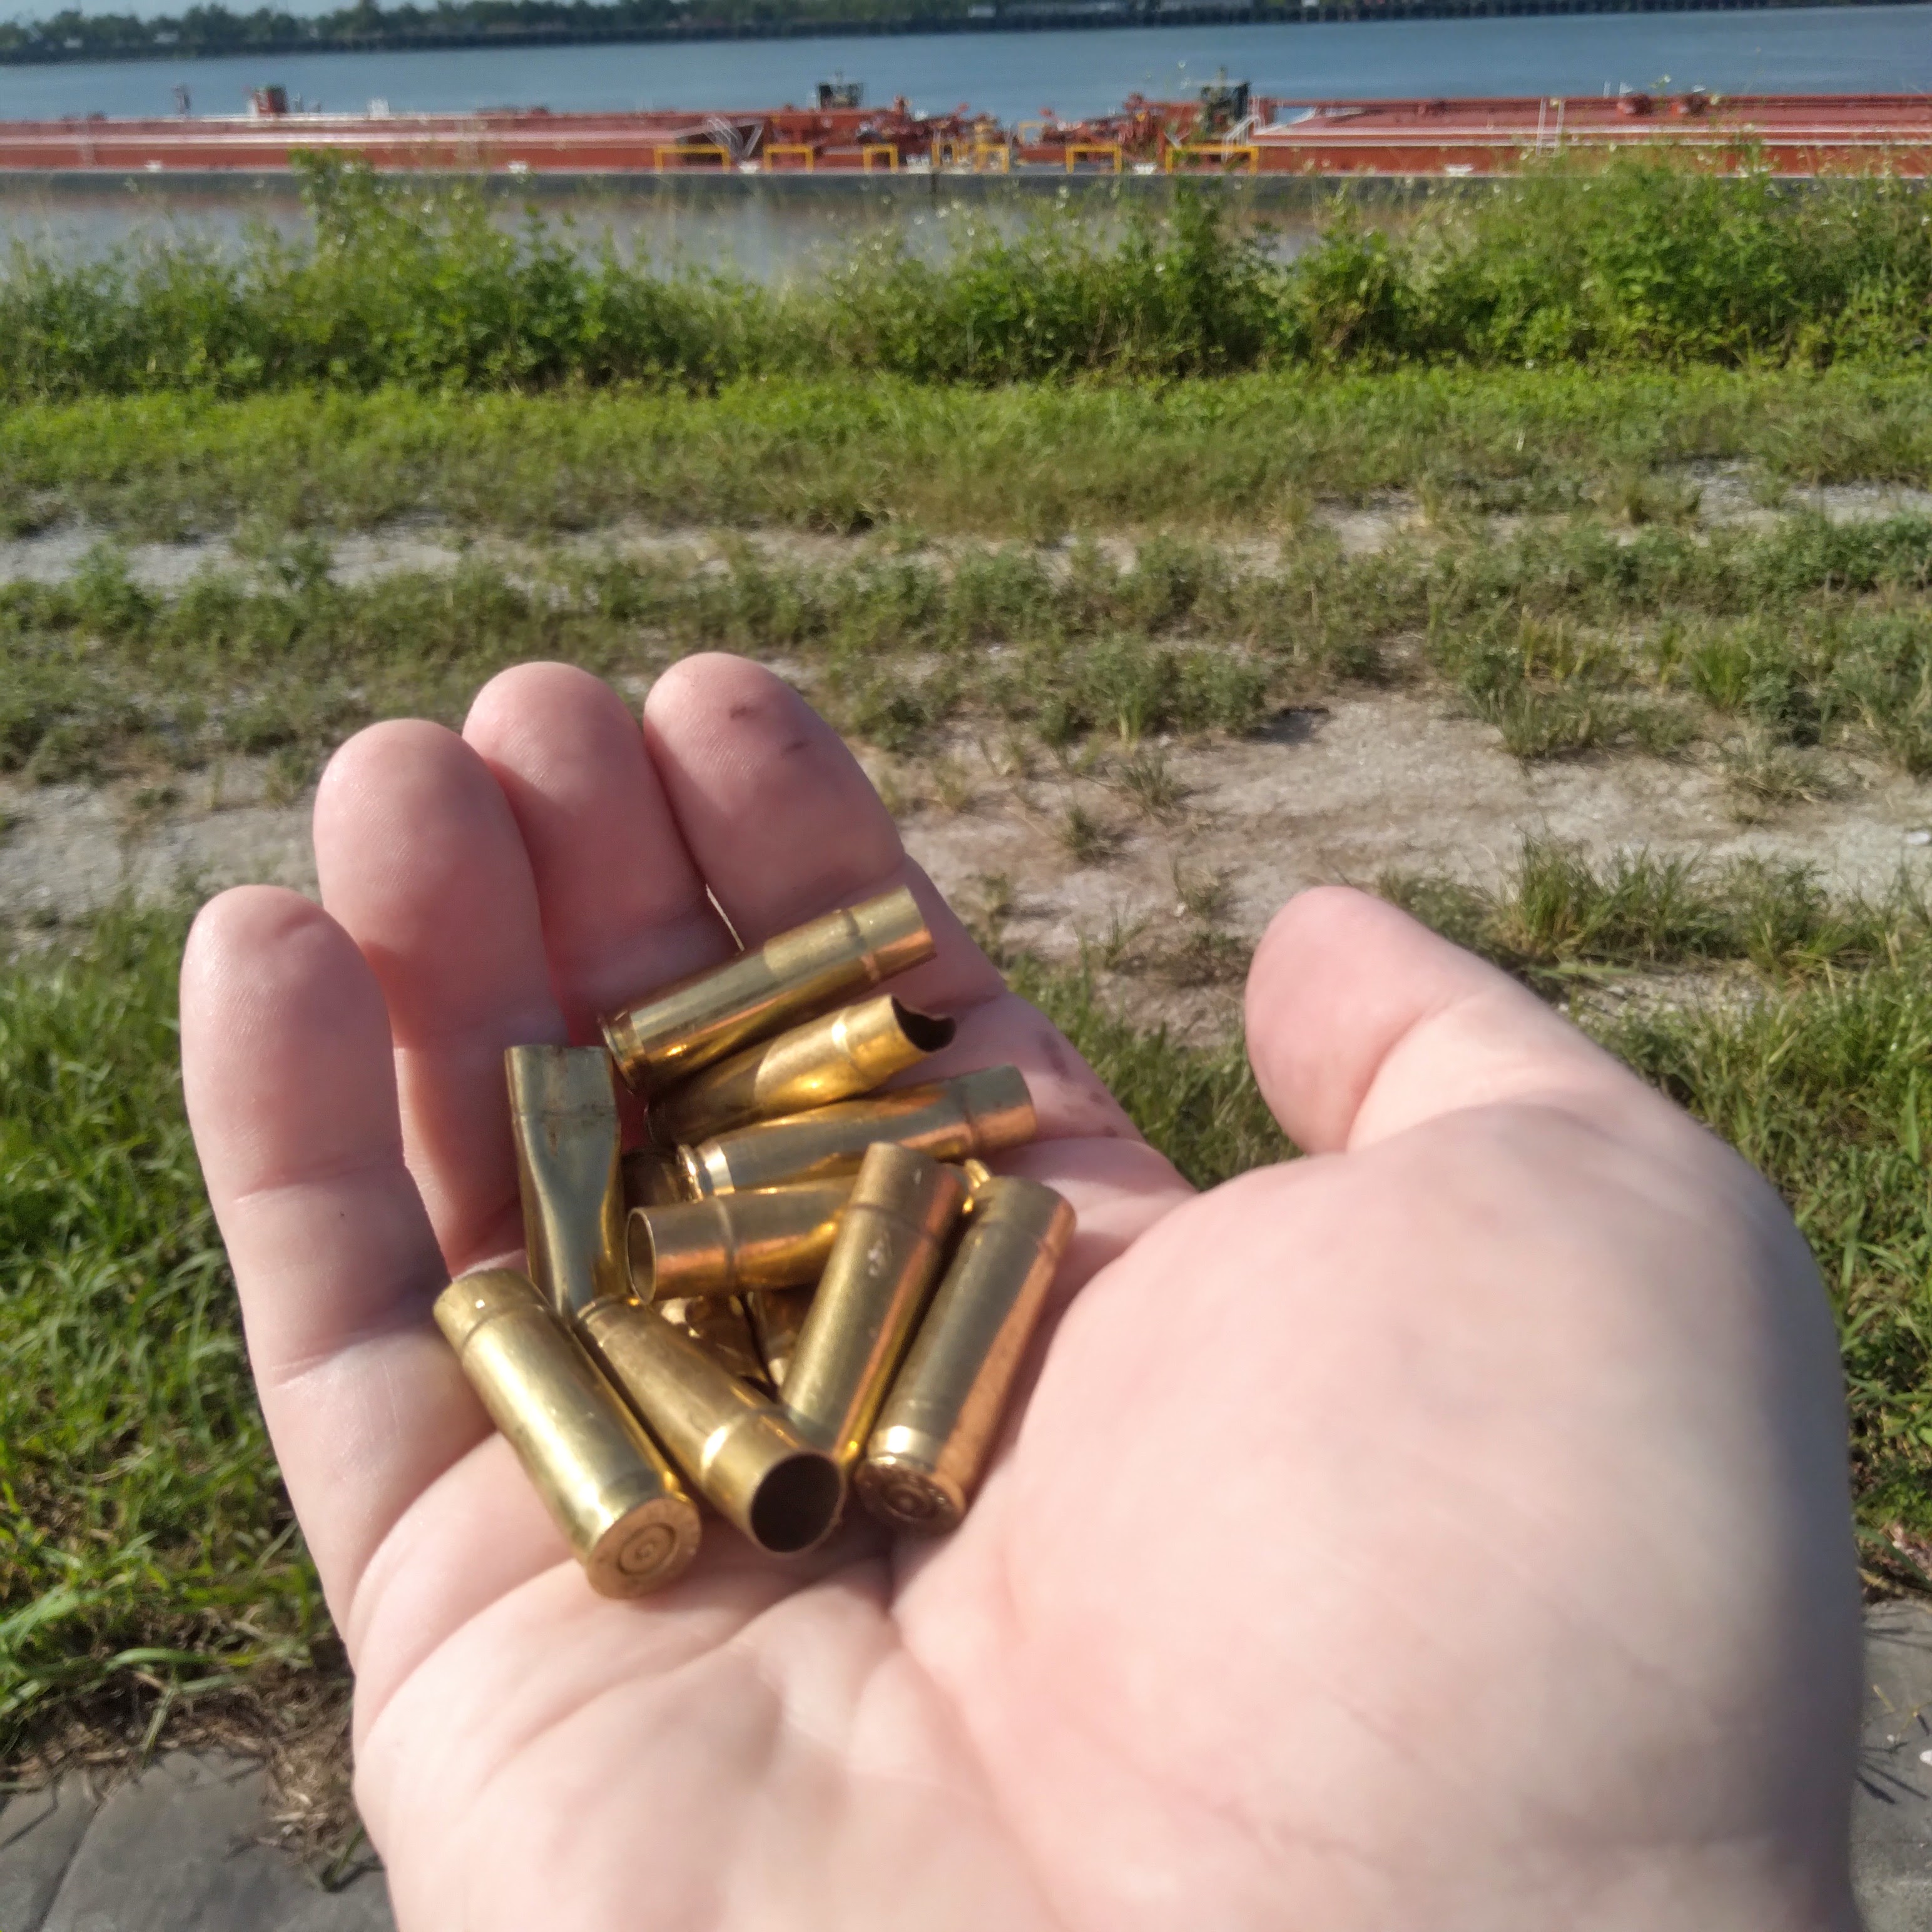 Bullet casings found on the levee September 9, 2022.